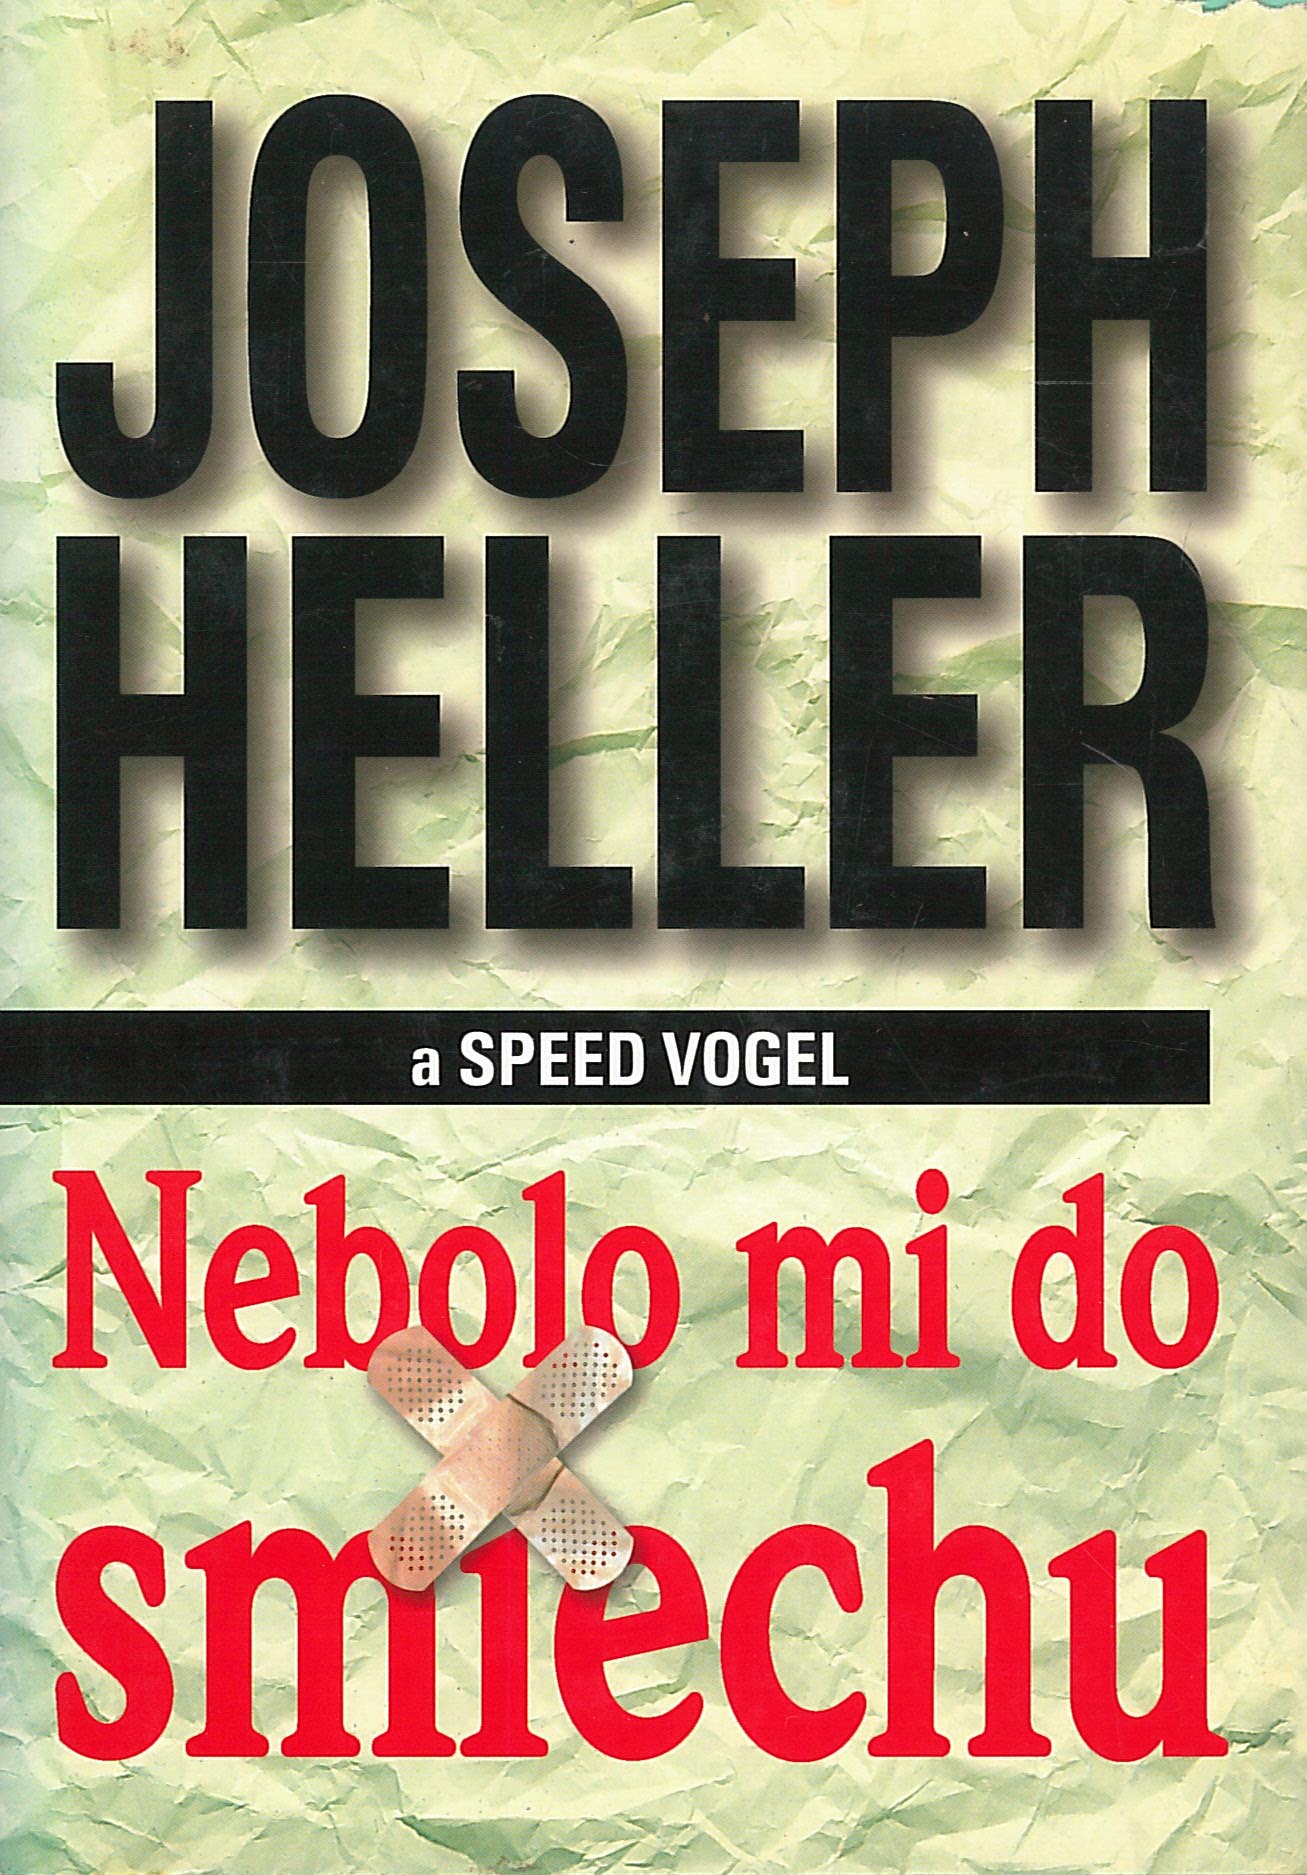 Nebolo mi do smiechu (Joseph Heller, Speed Vogel)